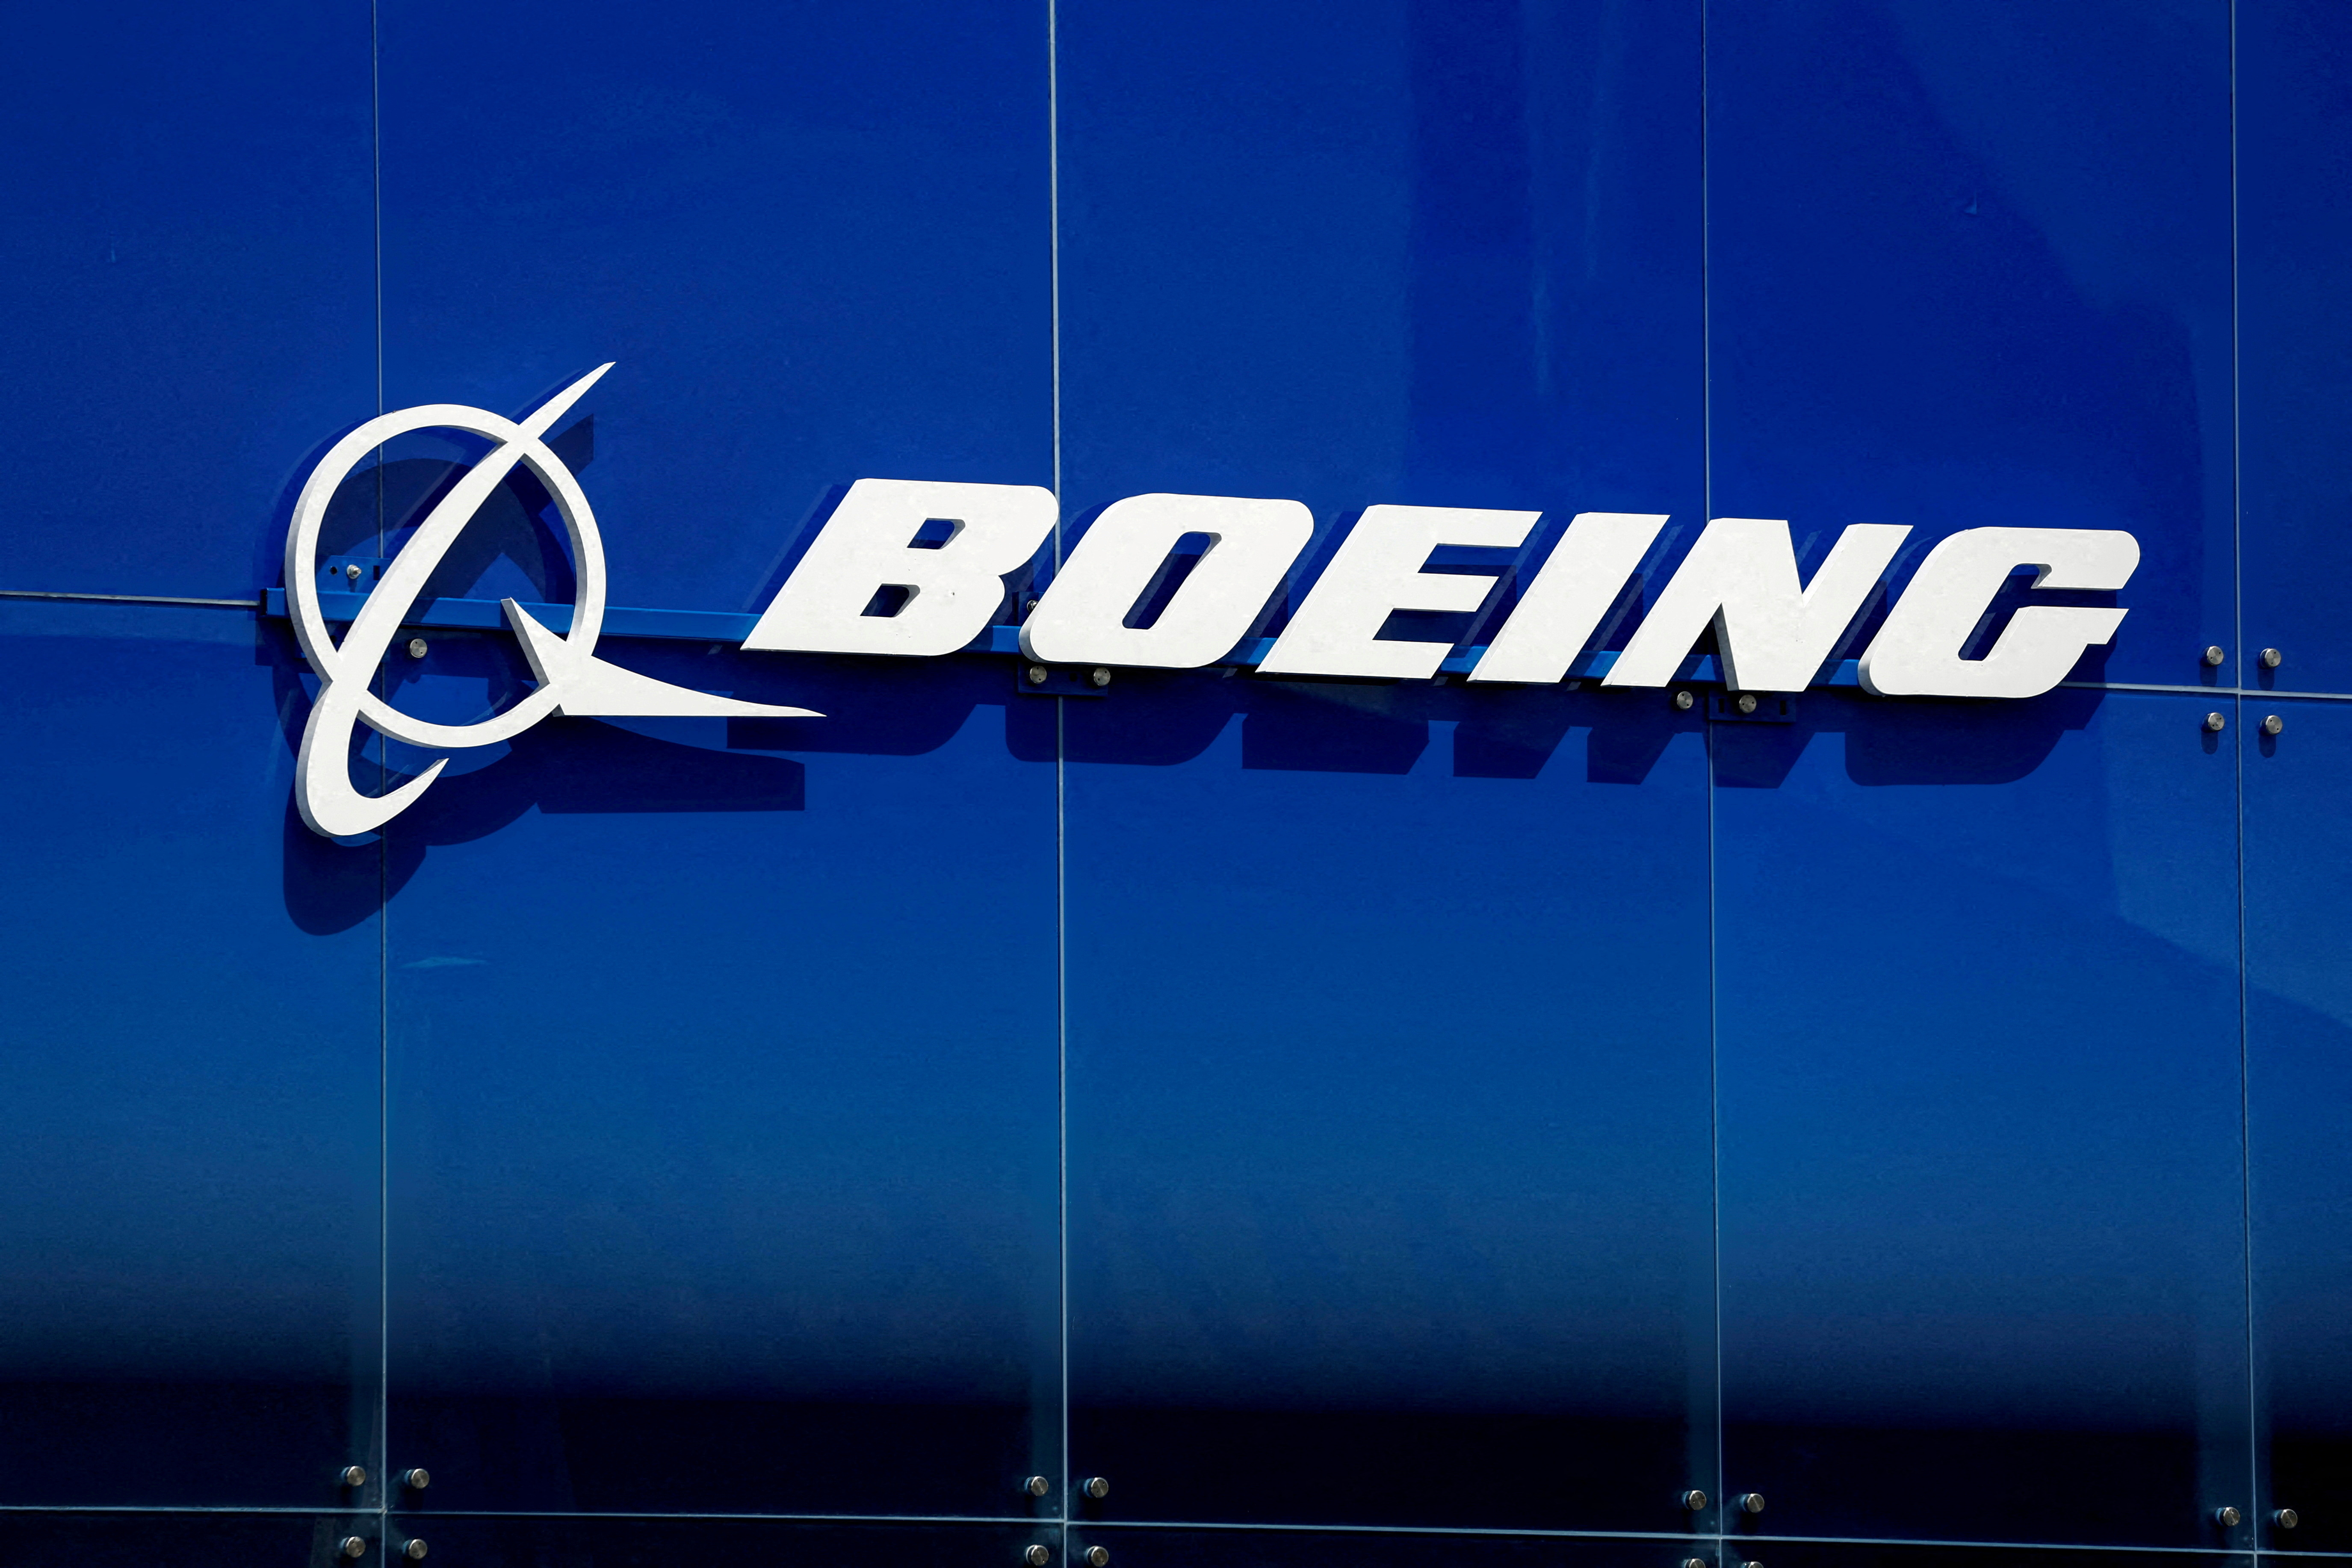 Boeing's logo